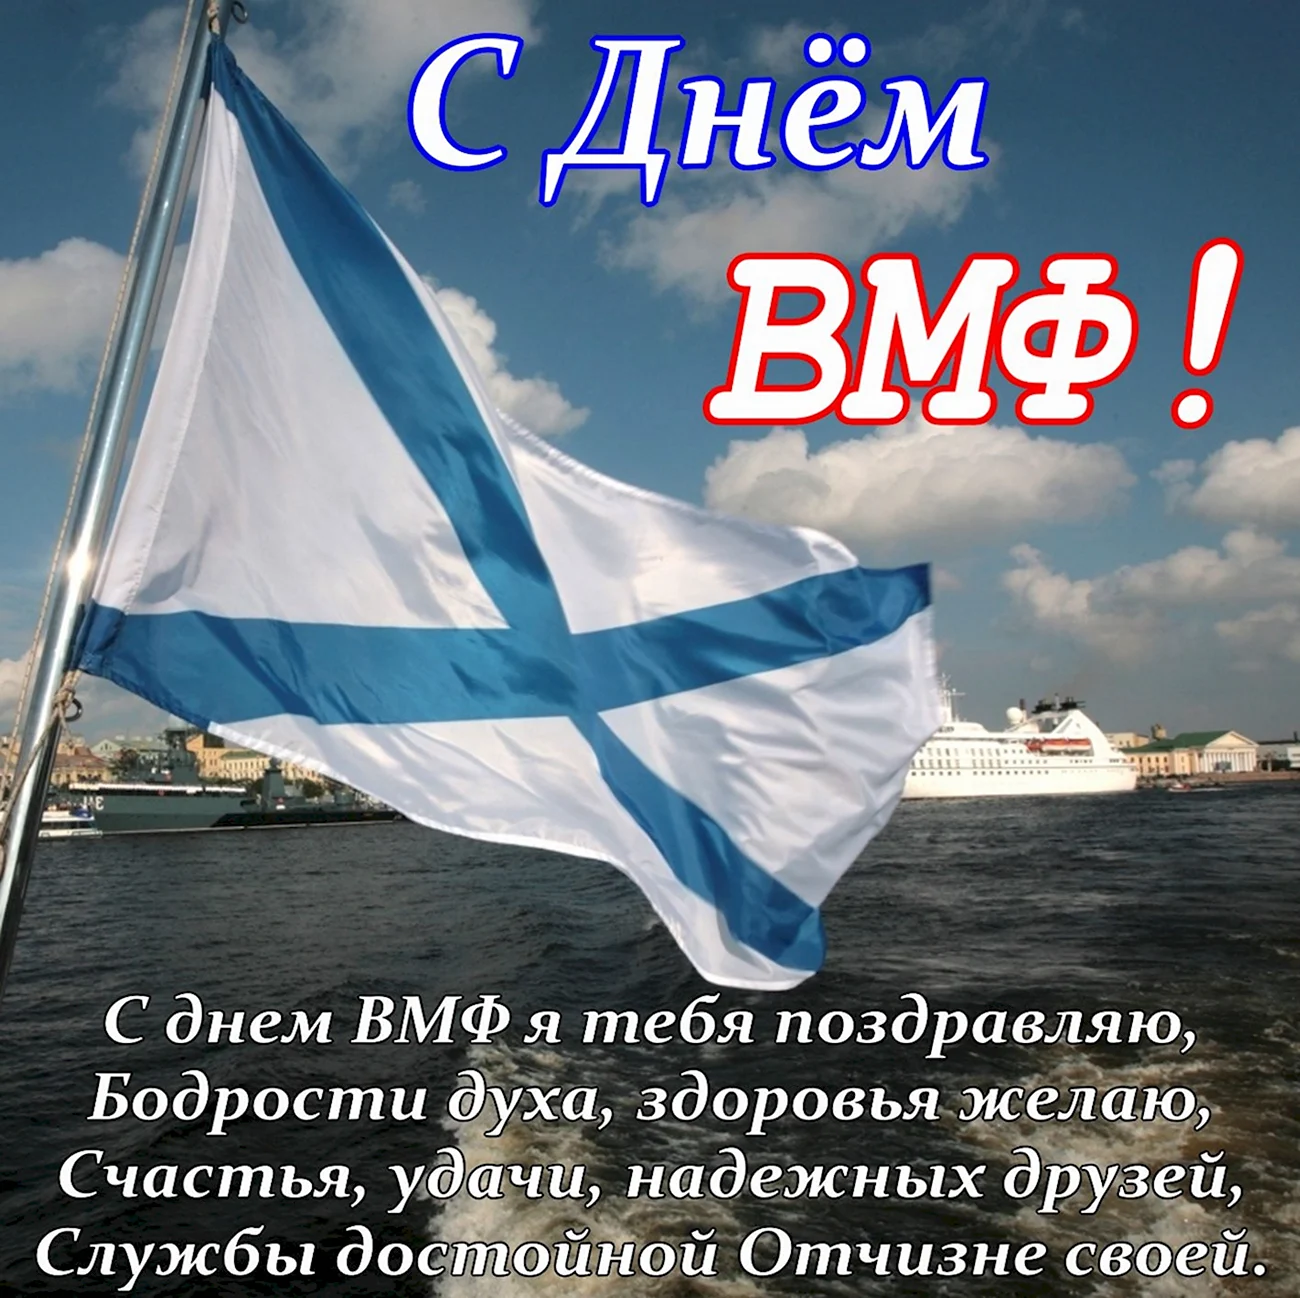 Андреевский флаг и флаг военно-морского флота. Картинка